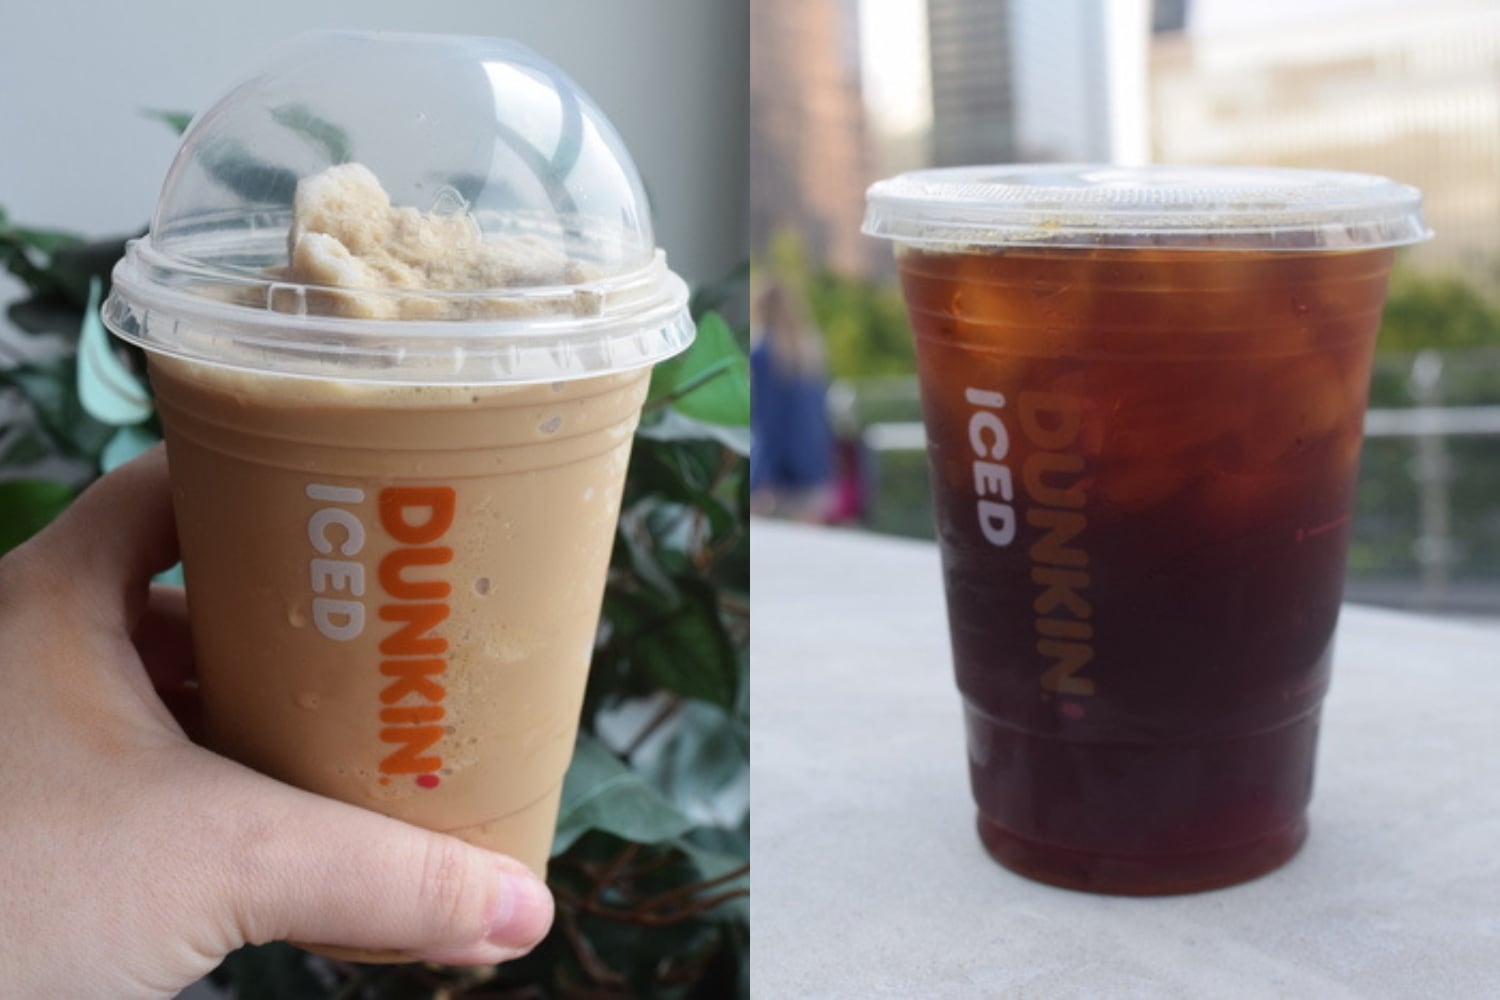 Taste Test: Is Dunkin' Espresso Better Than Starbucks?